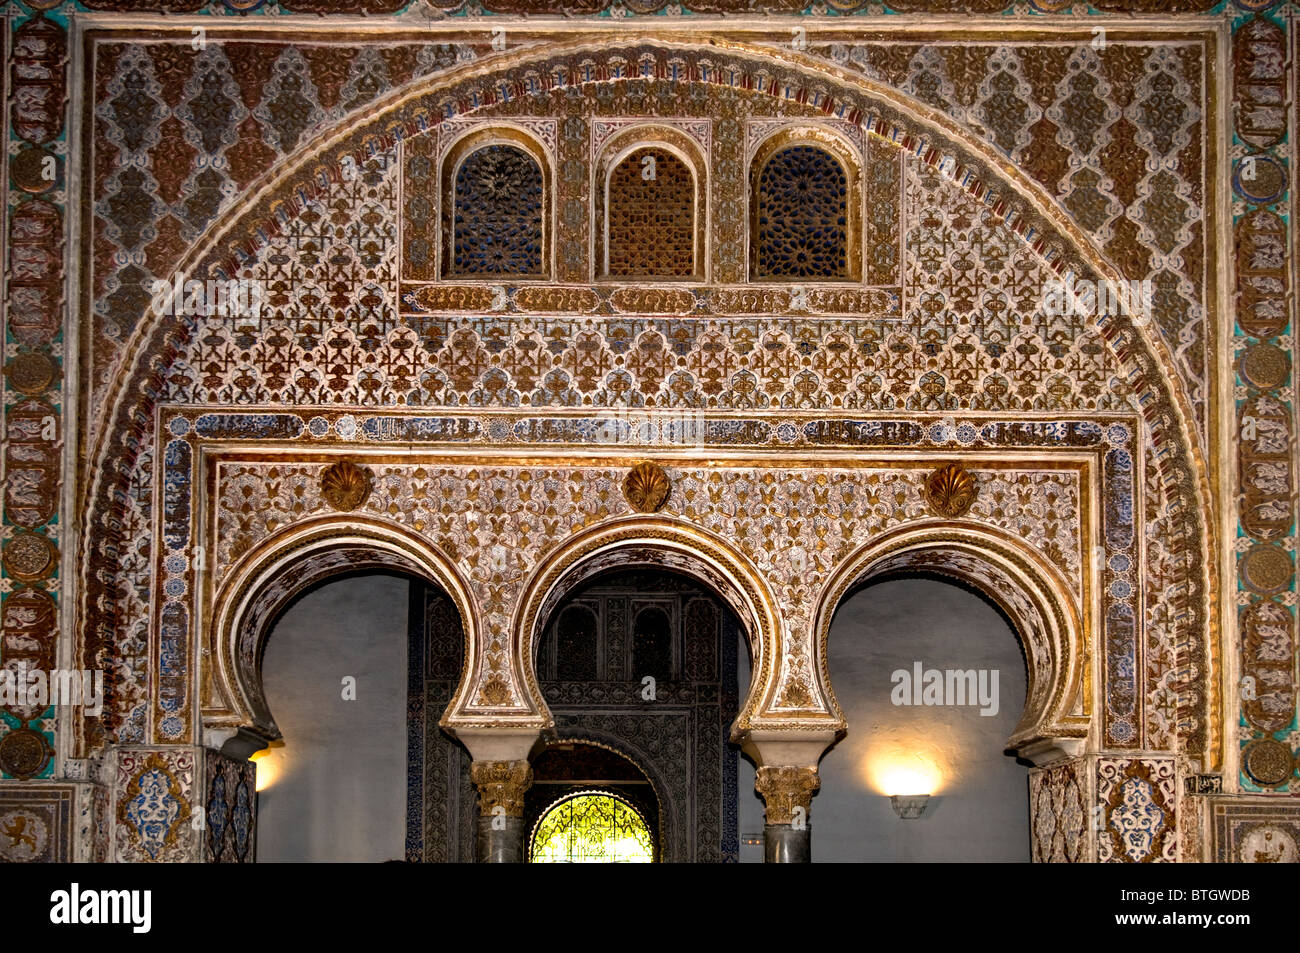 Alcazar Seville Spain Andalusia Royal Palace Moorish fort. Stock Photo